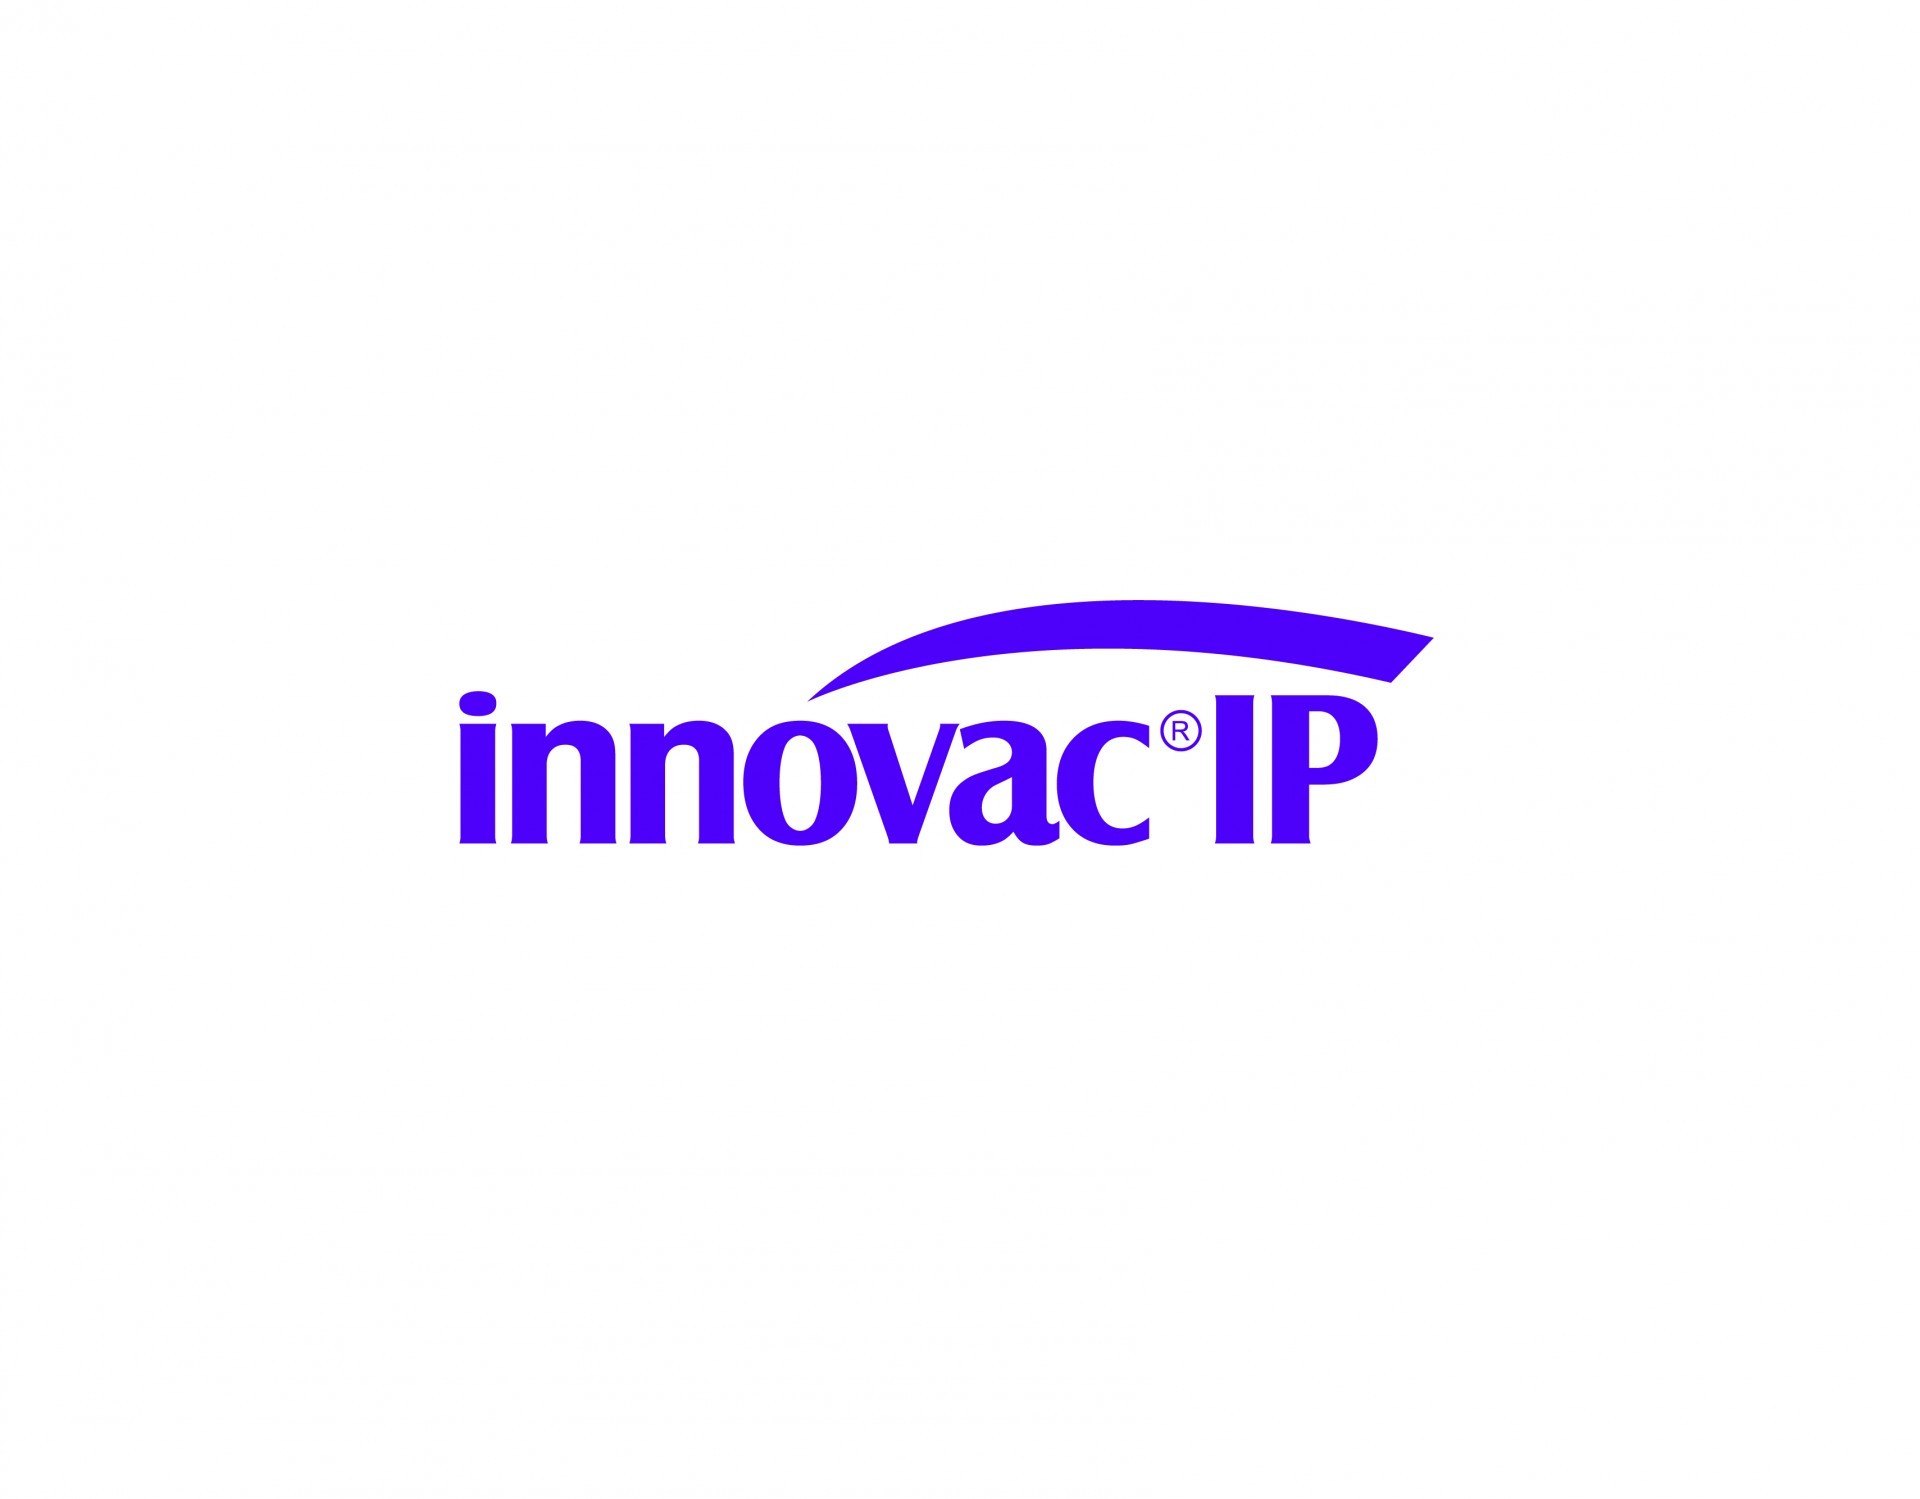 innovac® ip